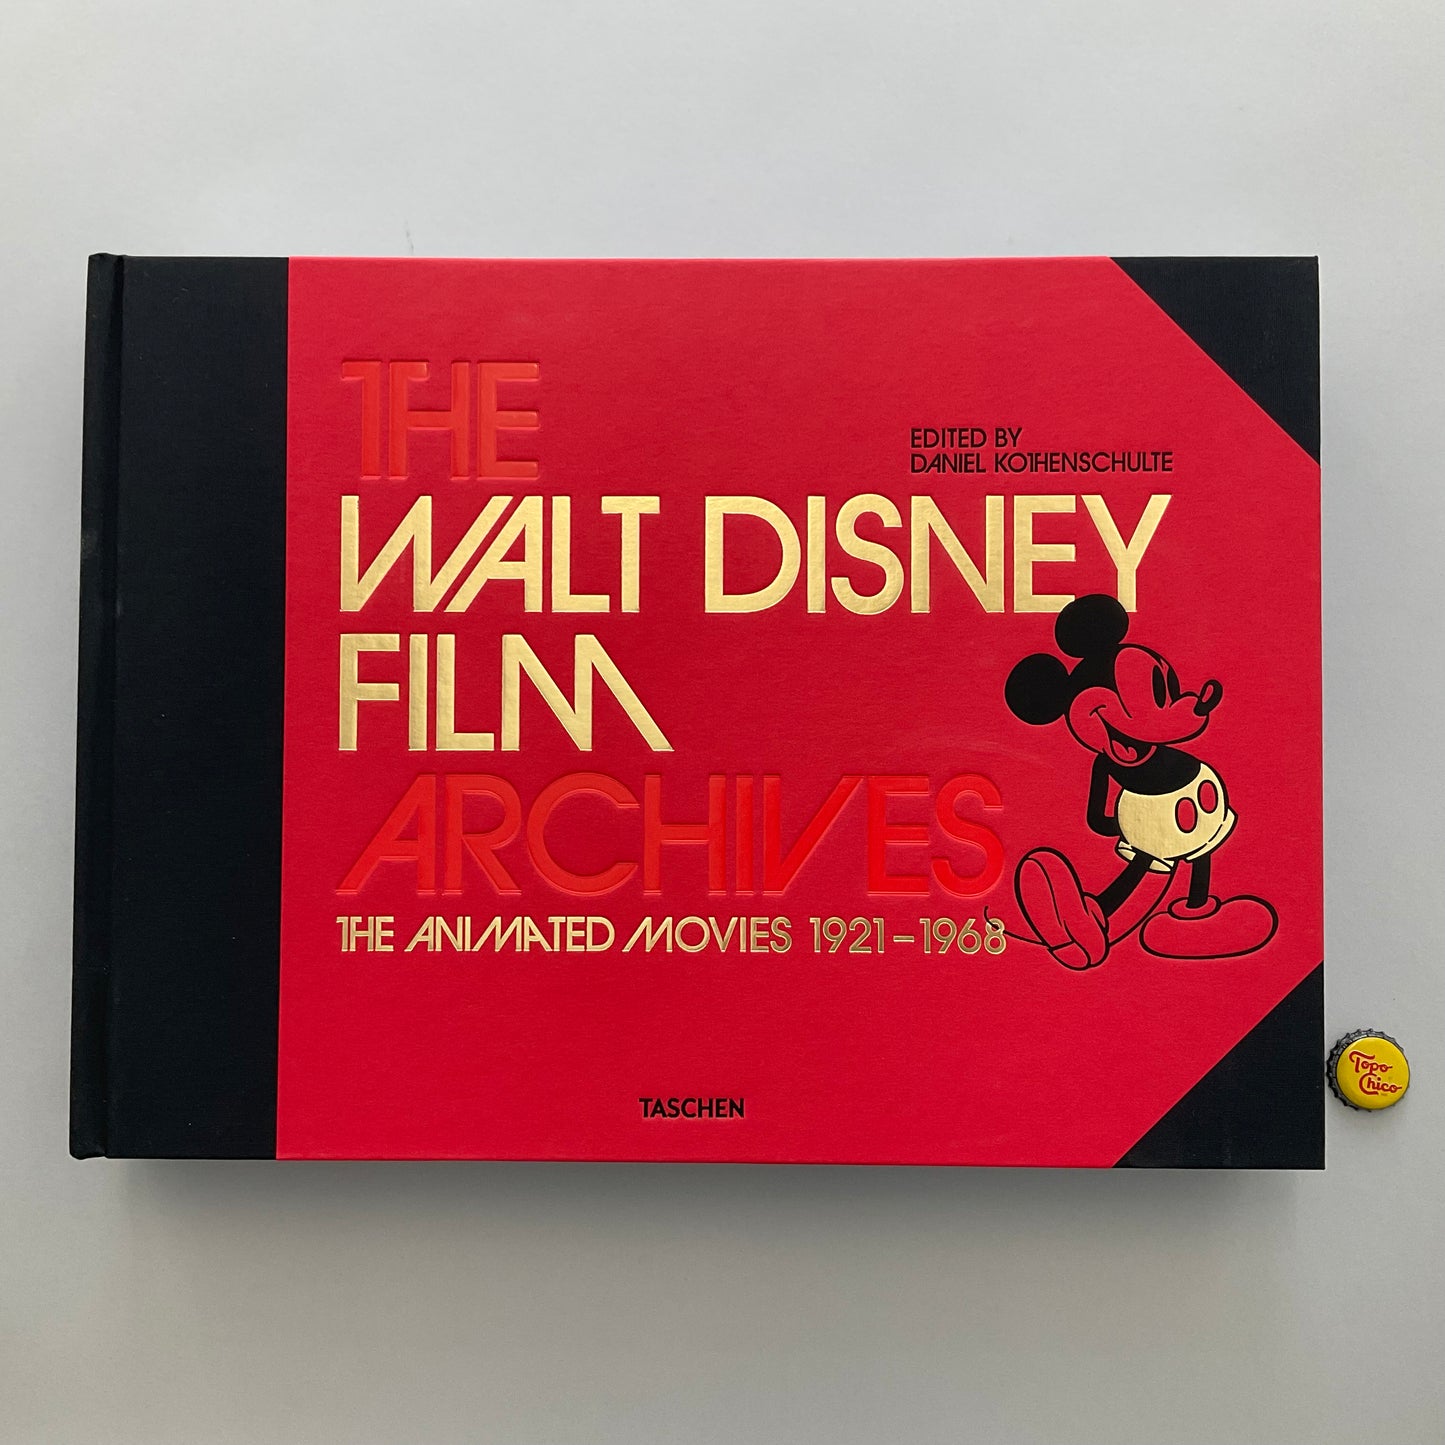 The Walt Disney Film Archives Book